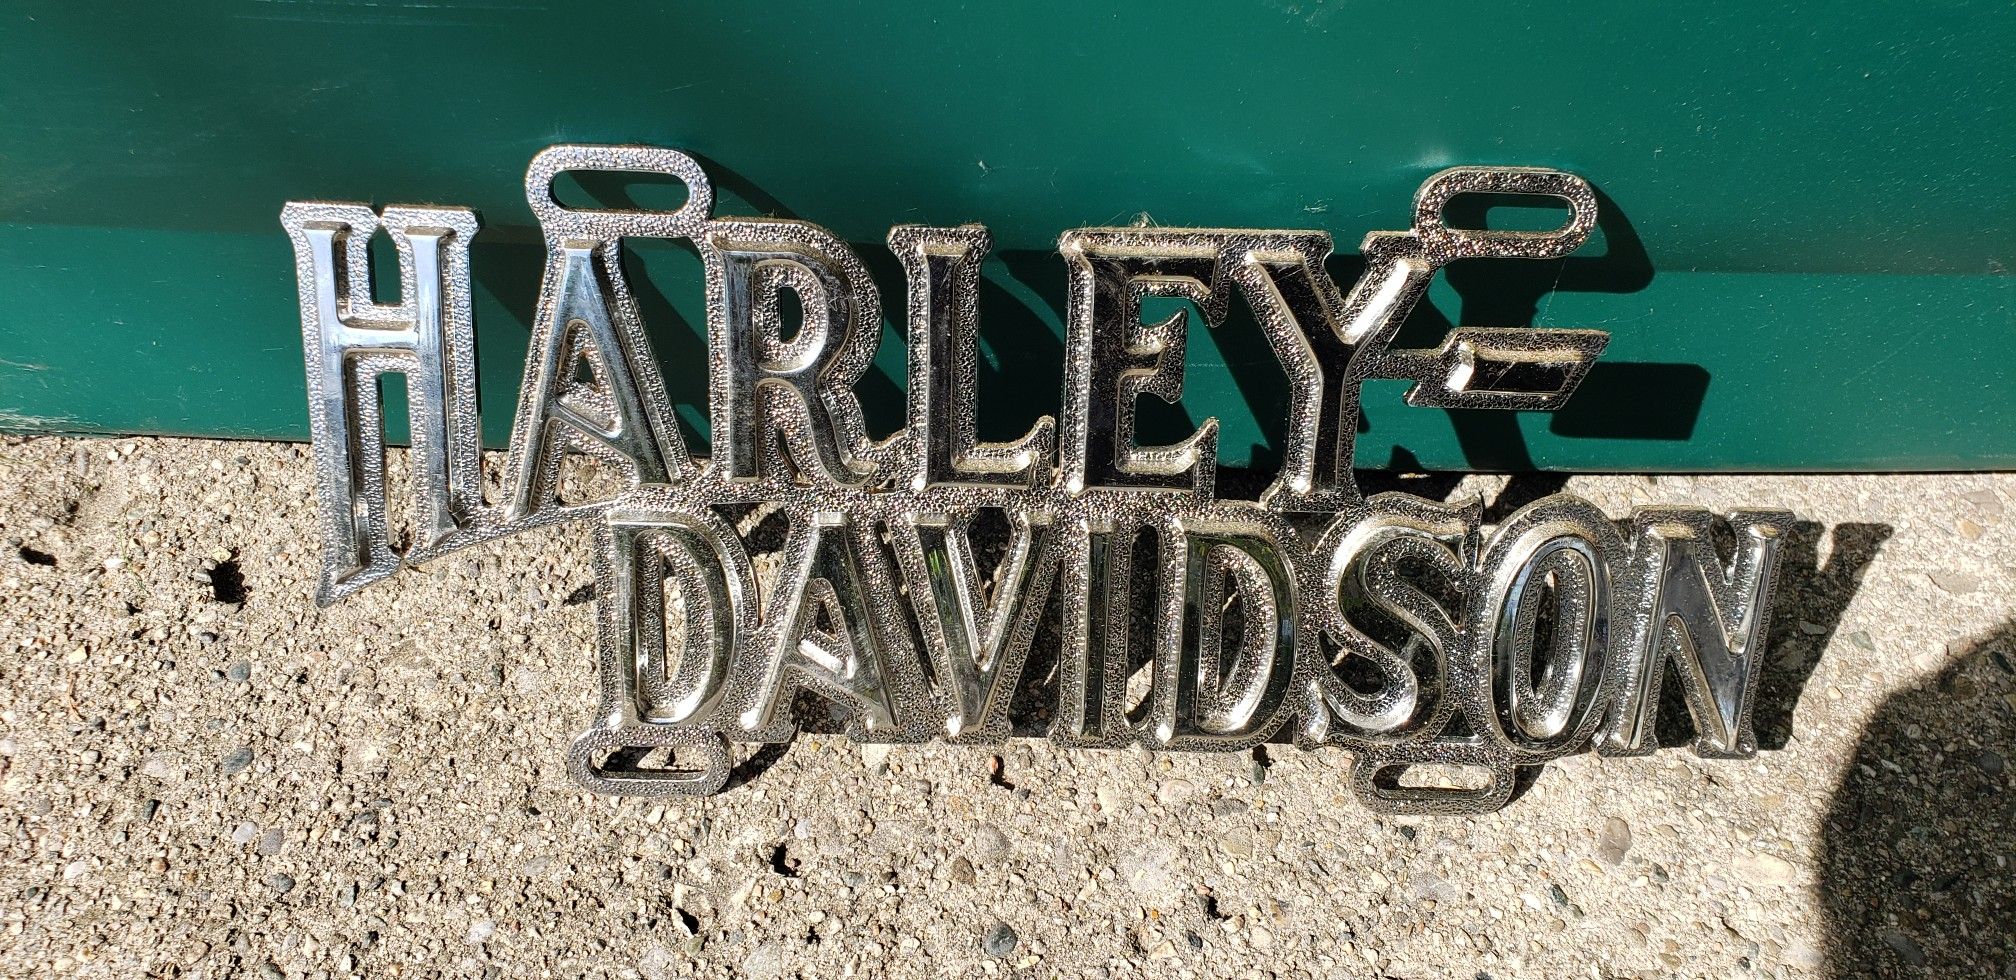 Harley Davidson Metal License Plate